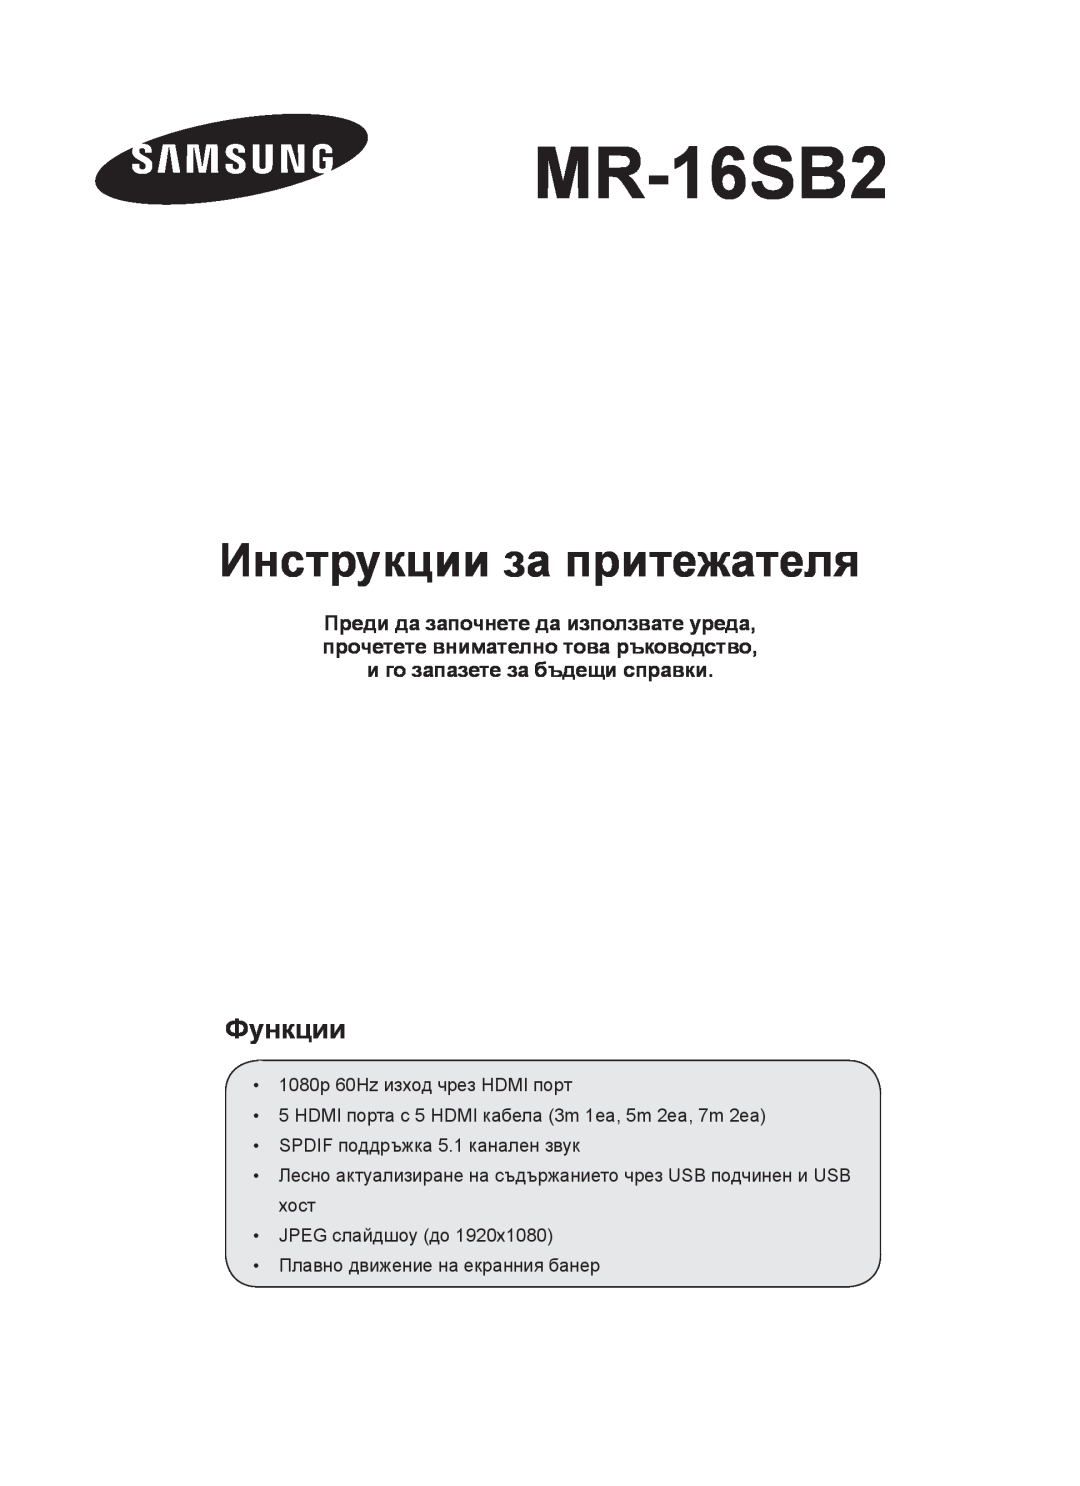 Samsung MR-16SB2 manual Инструкции за притежателя, Функции 